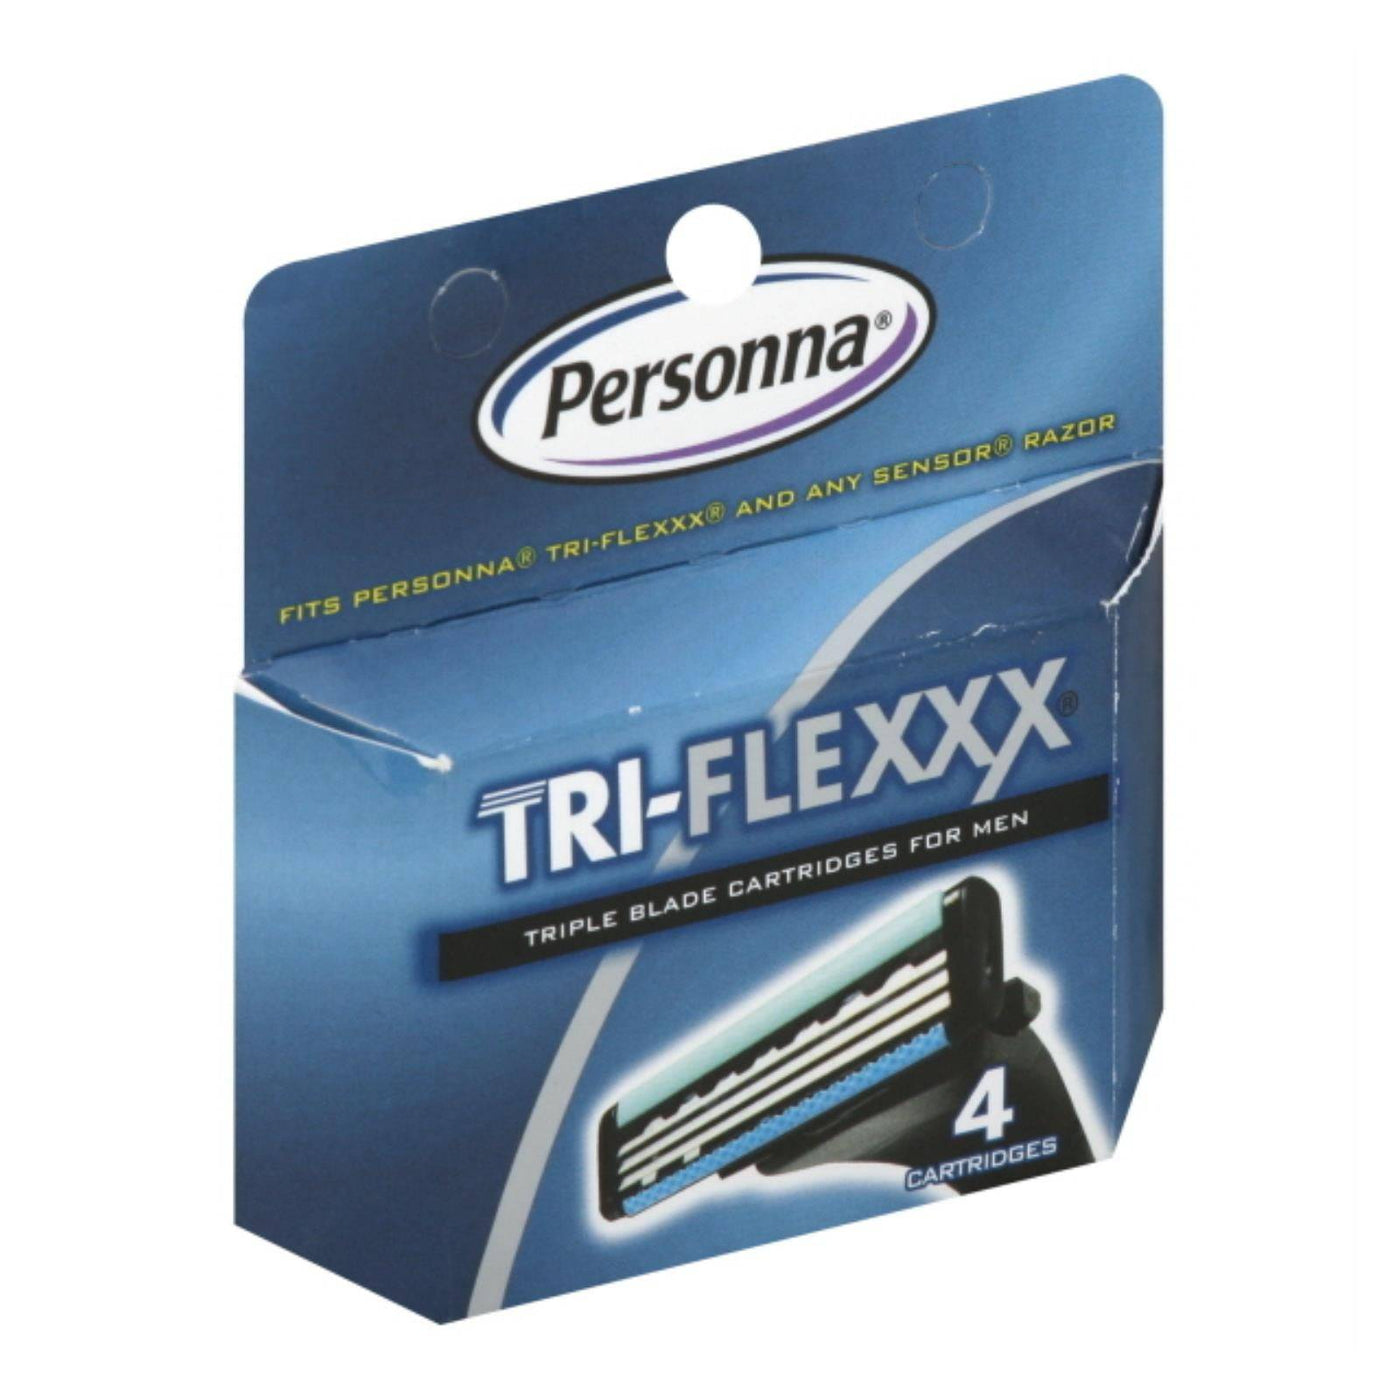 Buy Personna Tri-flexxx Razor System For Men Cartridge Refill - 4 Cartridges  at OnlyNaturals.us